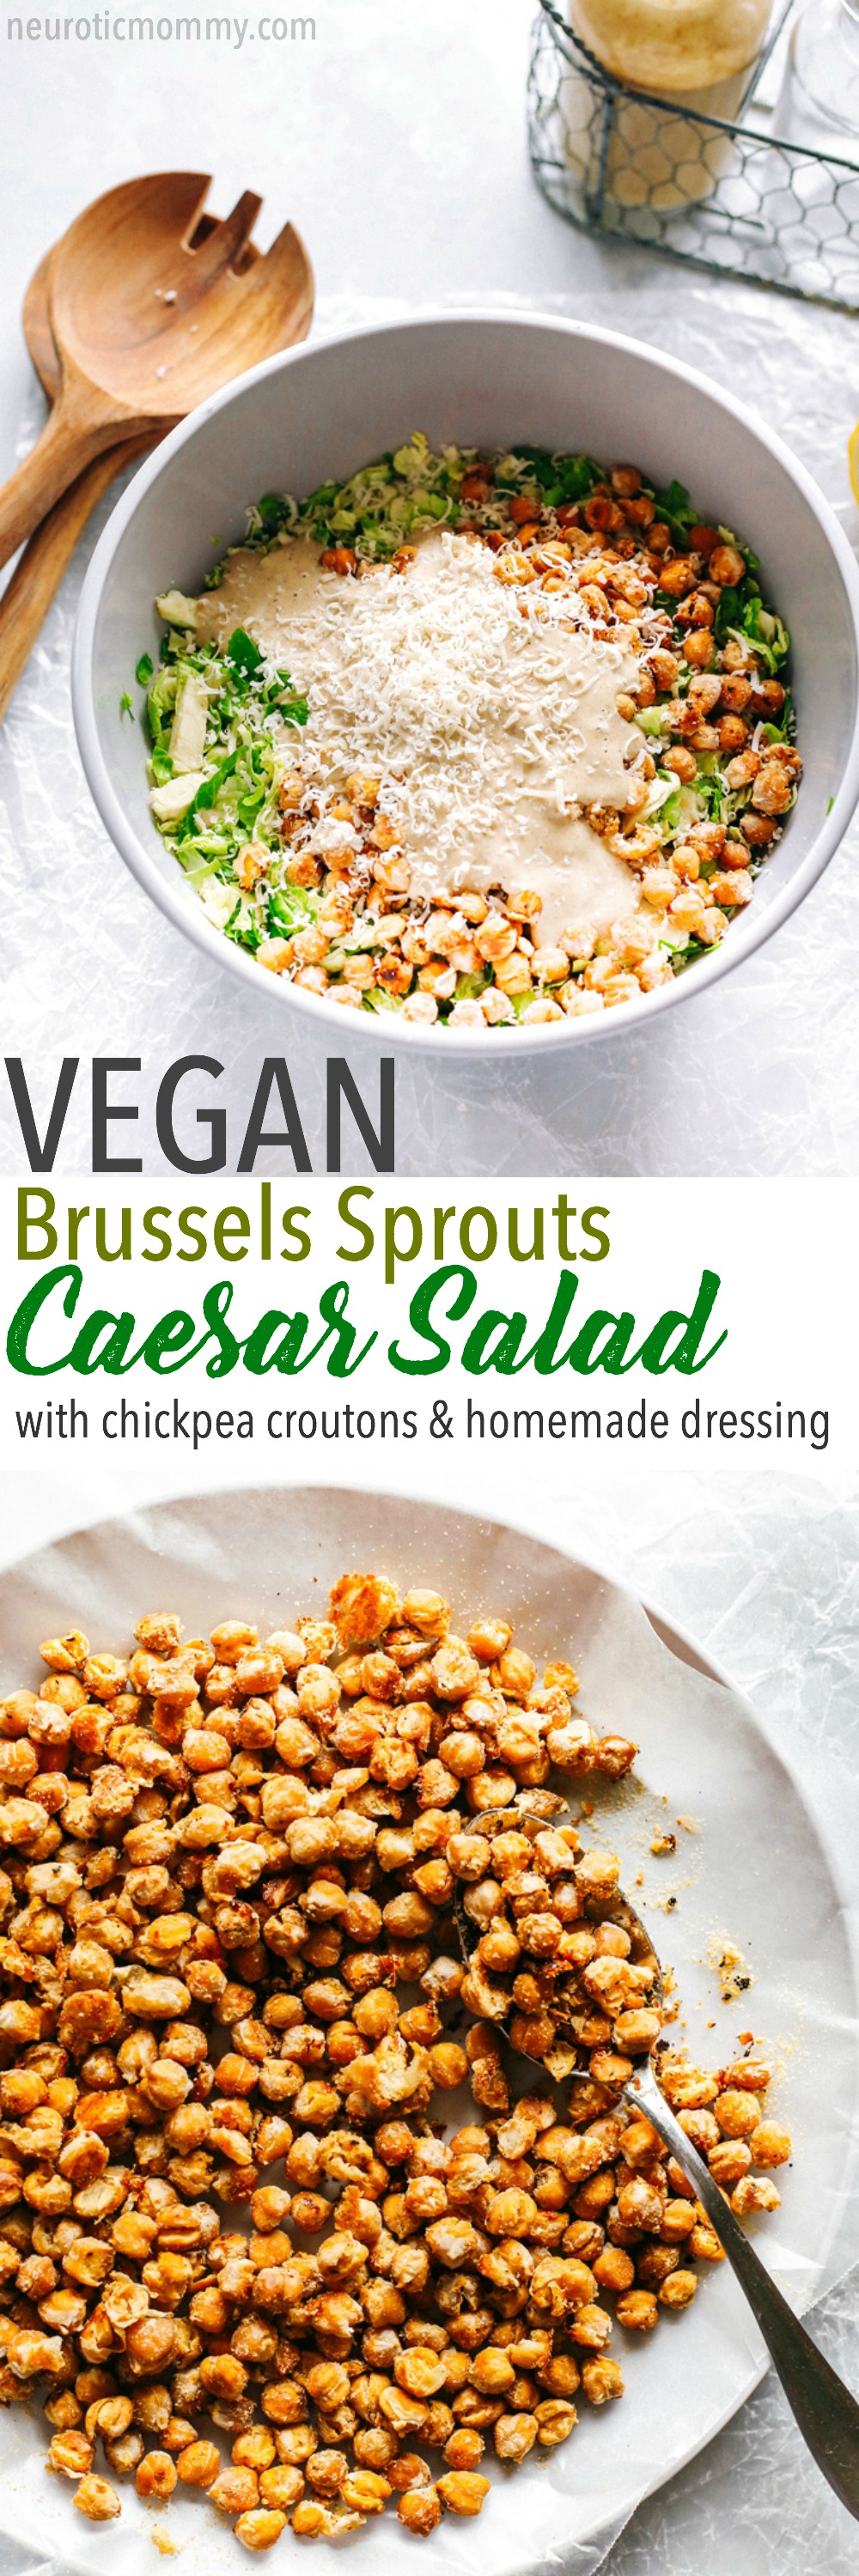 Vegan Brussels Sprouts Caesar Salad with Chickpea Croutons - Topped with chickpea croutons and a homemade vegan caesar dressing. NeuroticMommy.com #vegan #caesarsalad #healthy